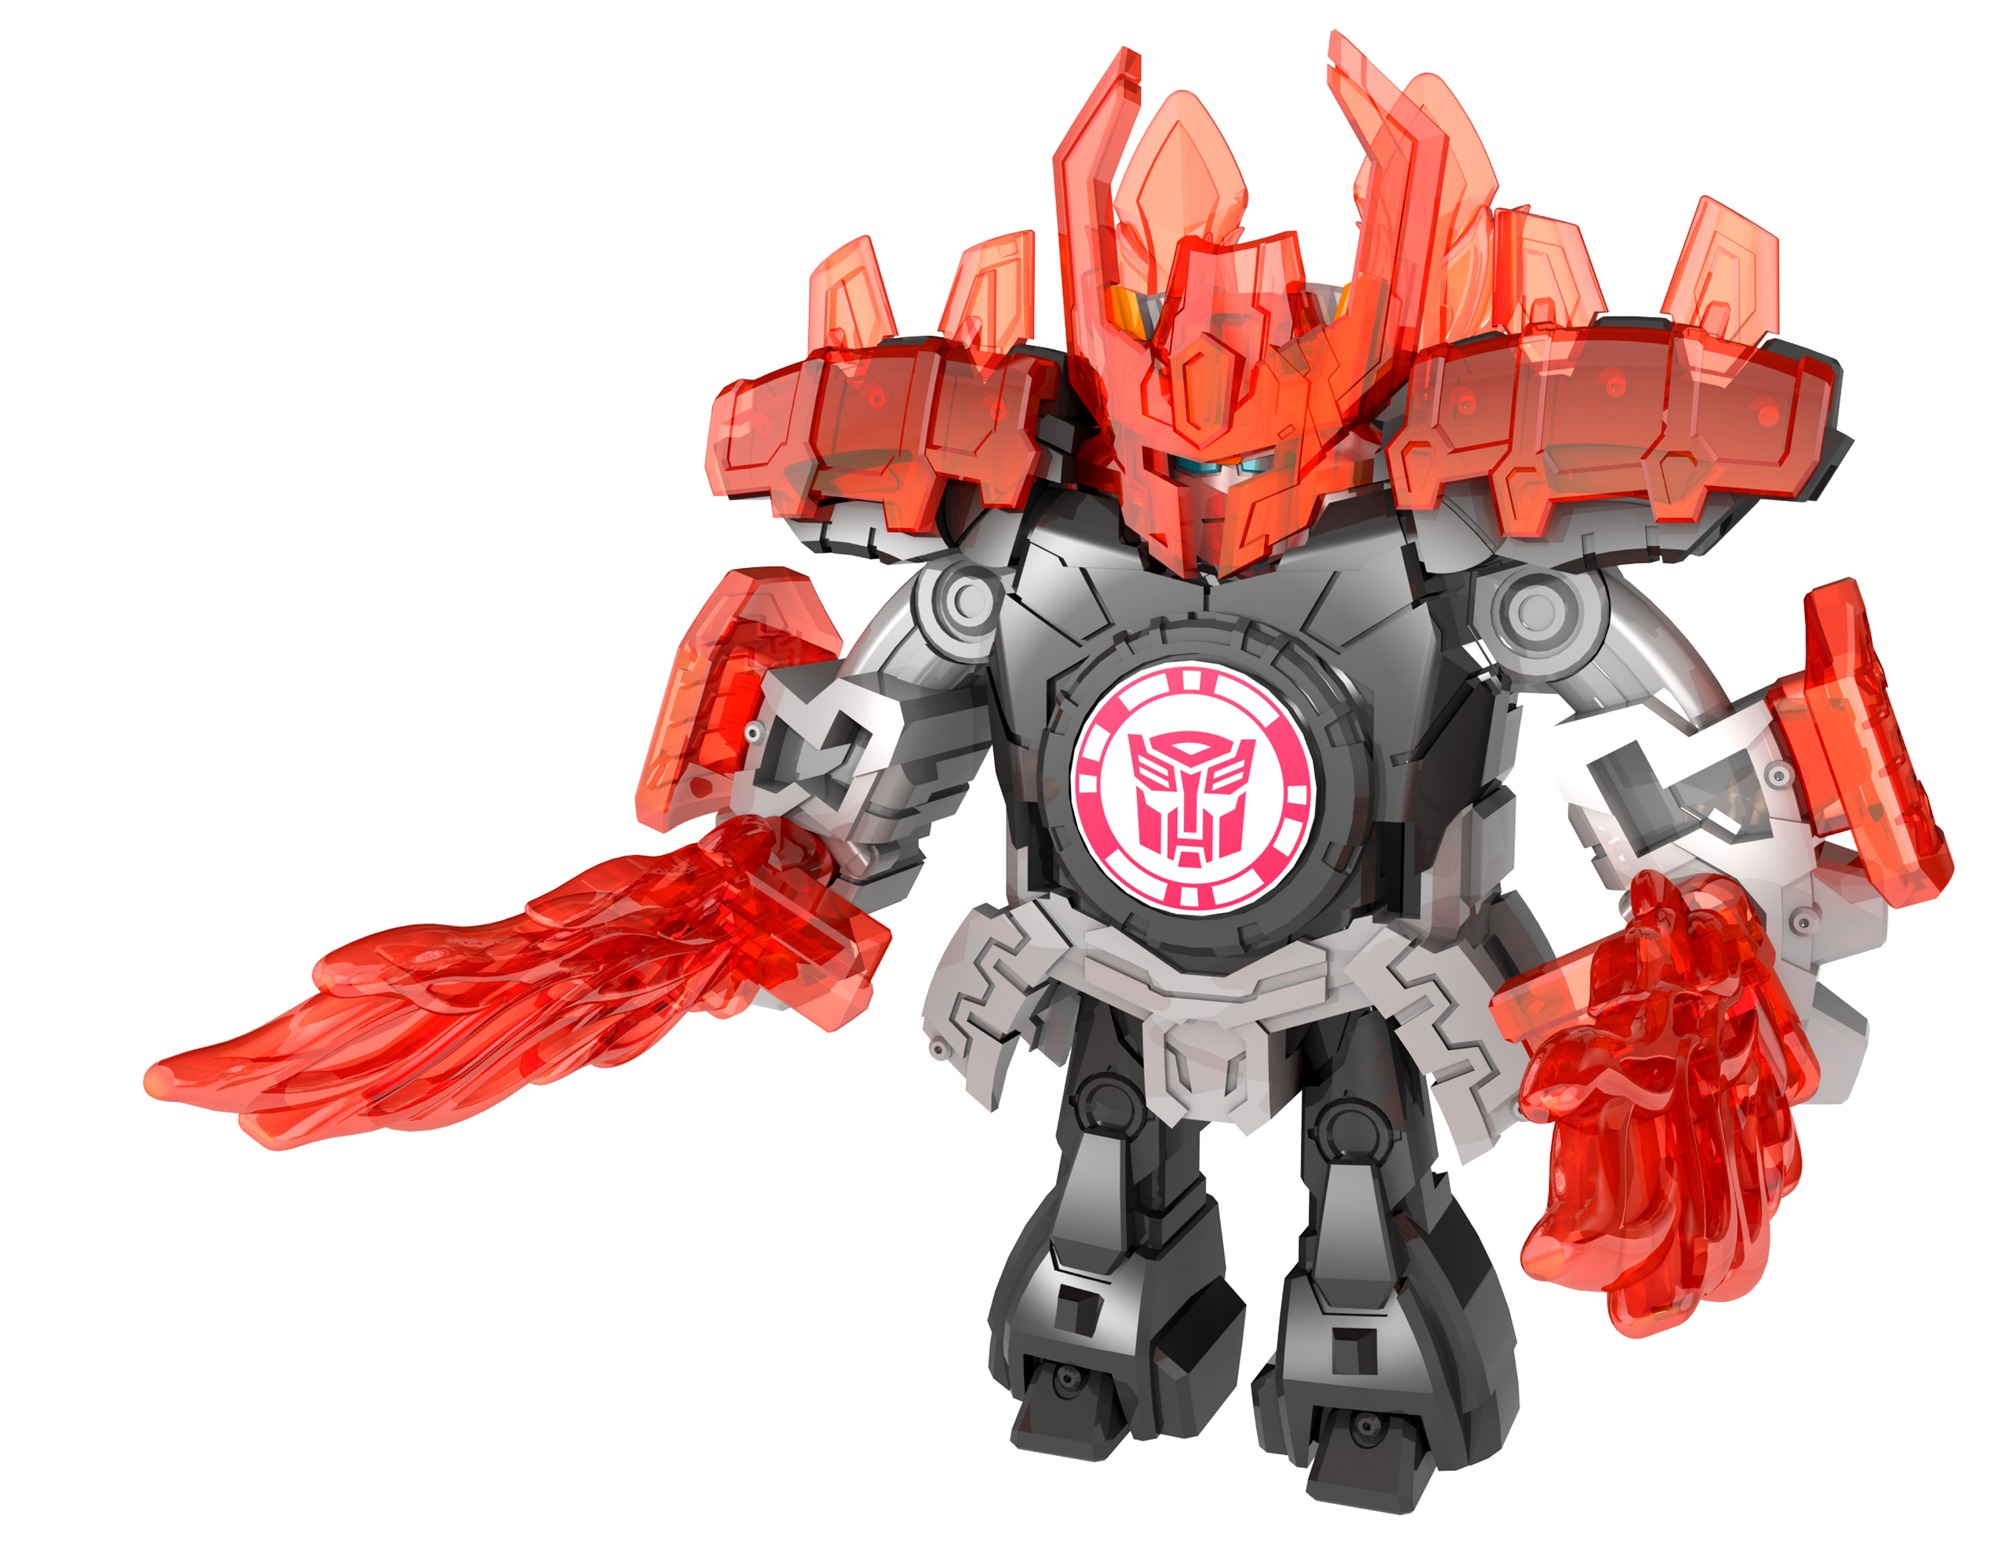 Код transformers. Миниконы трансформеры игрушки. Transformers Robots in Disguise игрушки Hasbro. Transformers Robots in Disguise. Transformers Robots in Disguise коды.